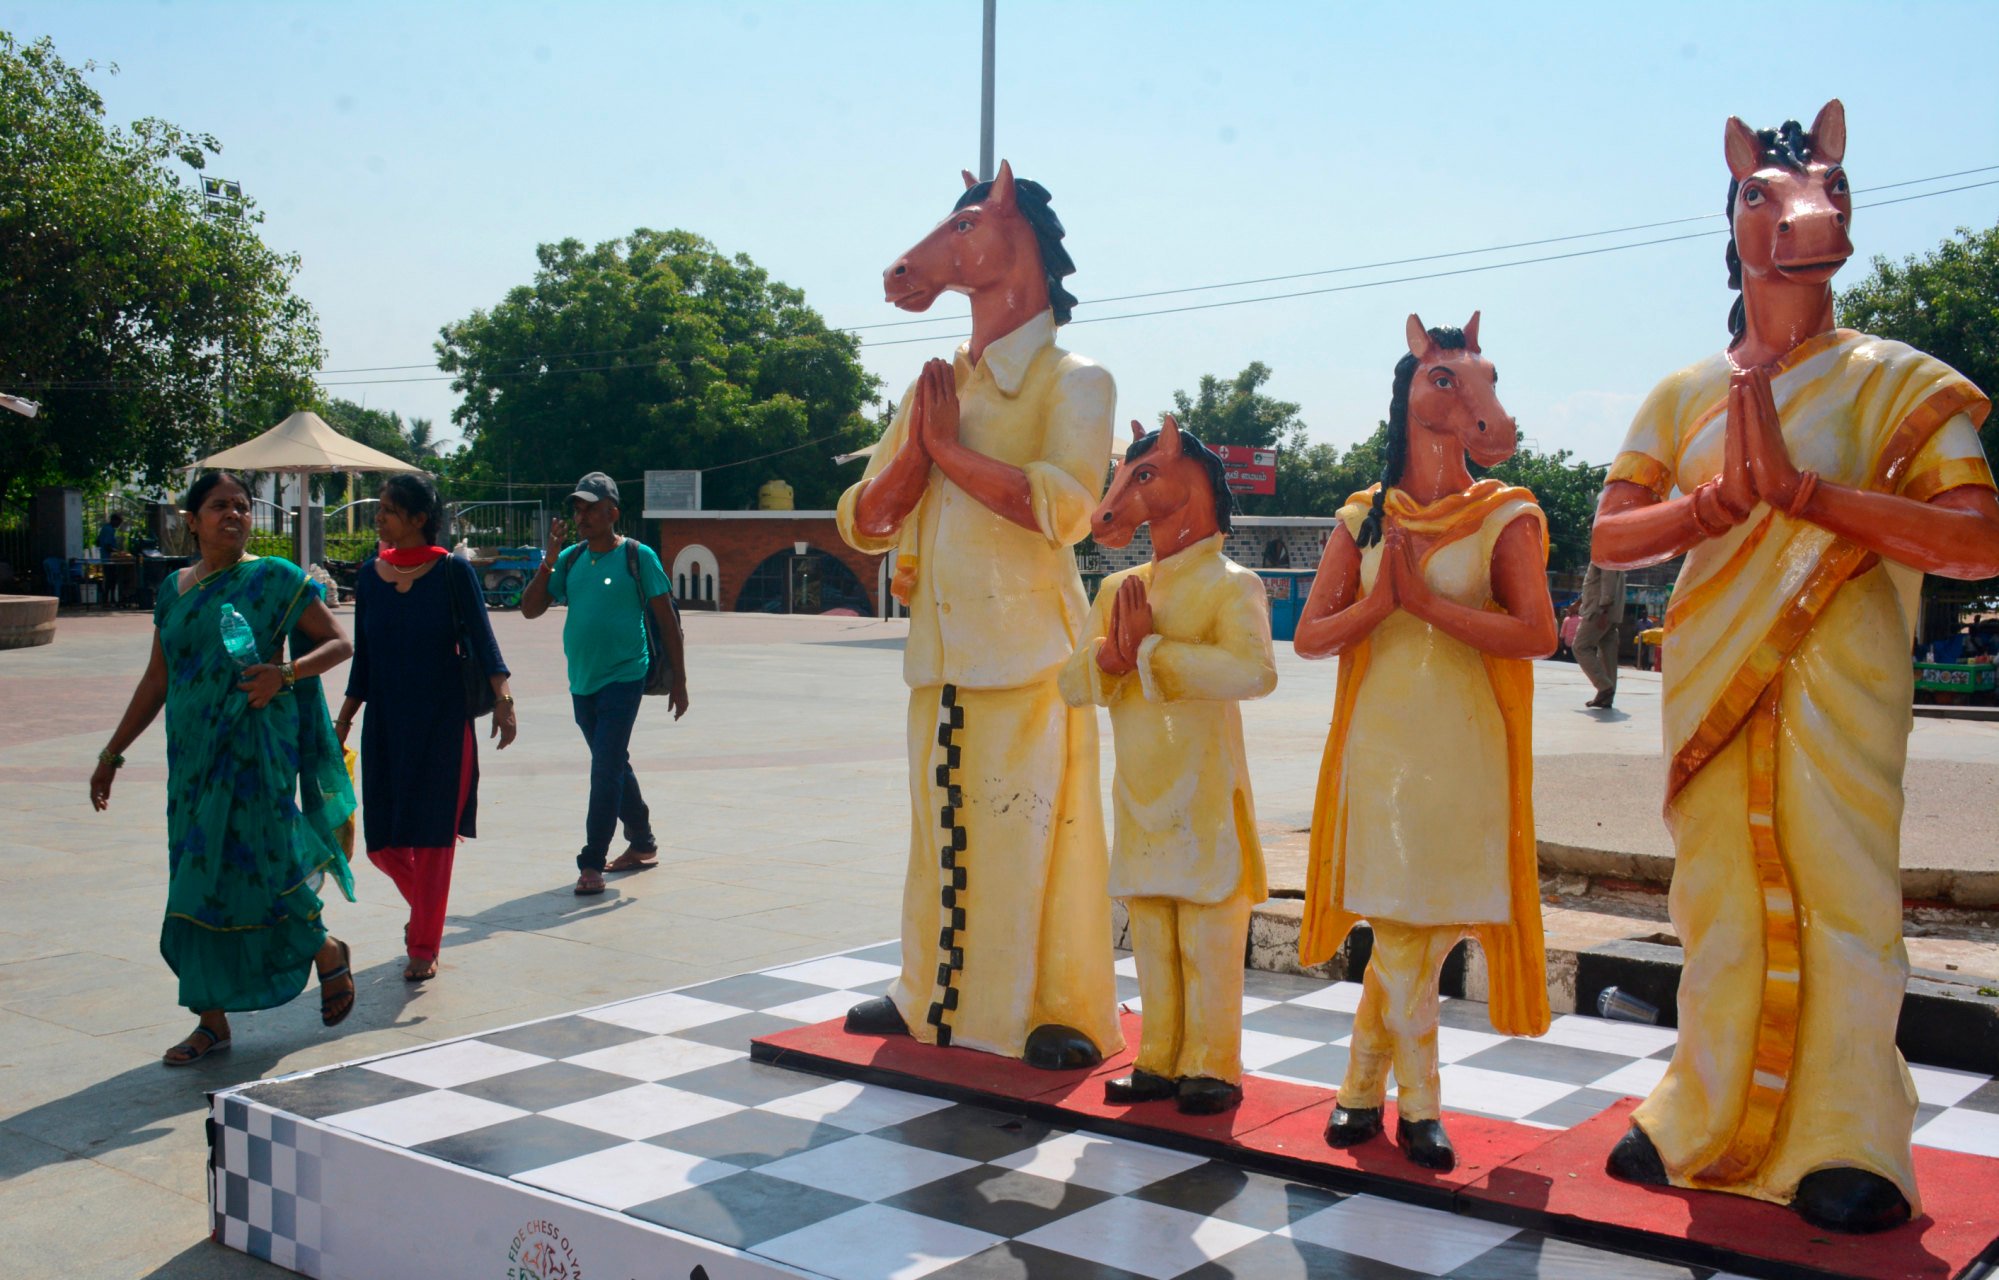 Meet 44th Chess Olympiad Mascot Thambi 